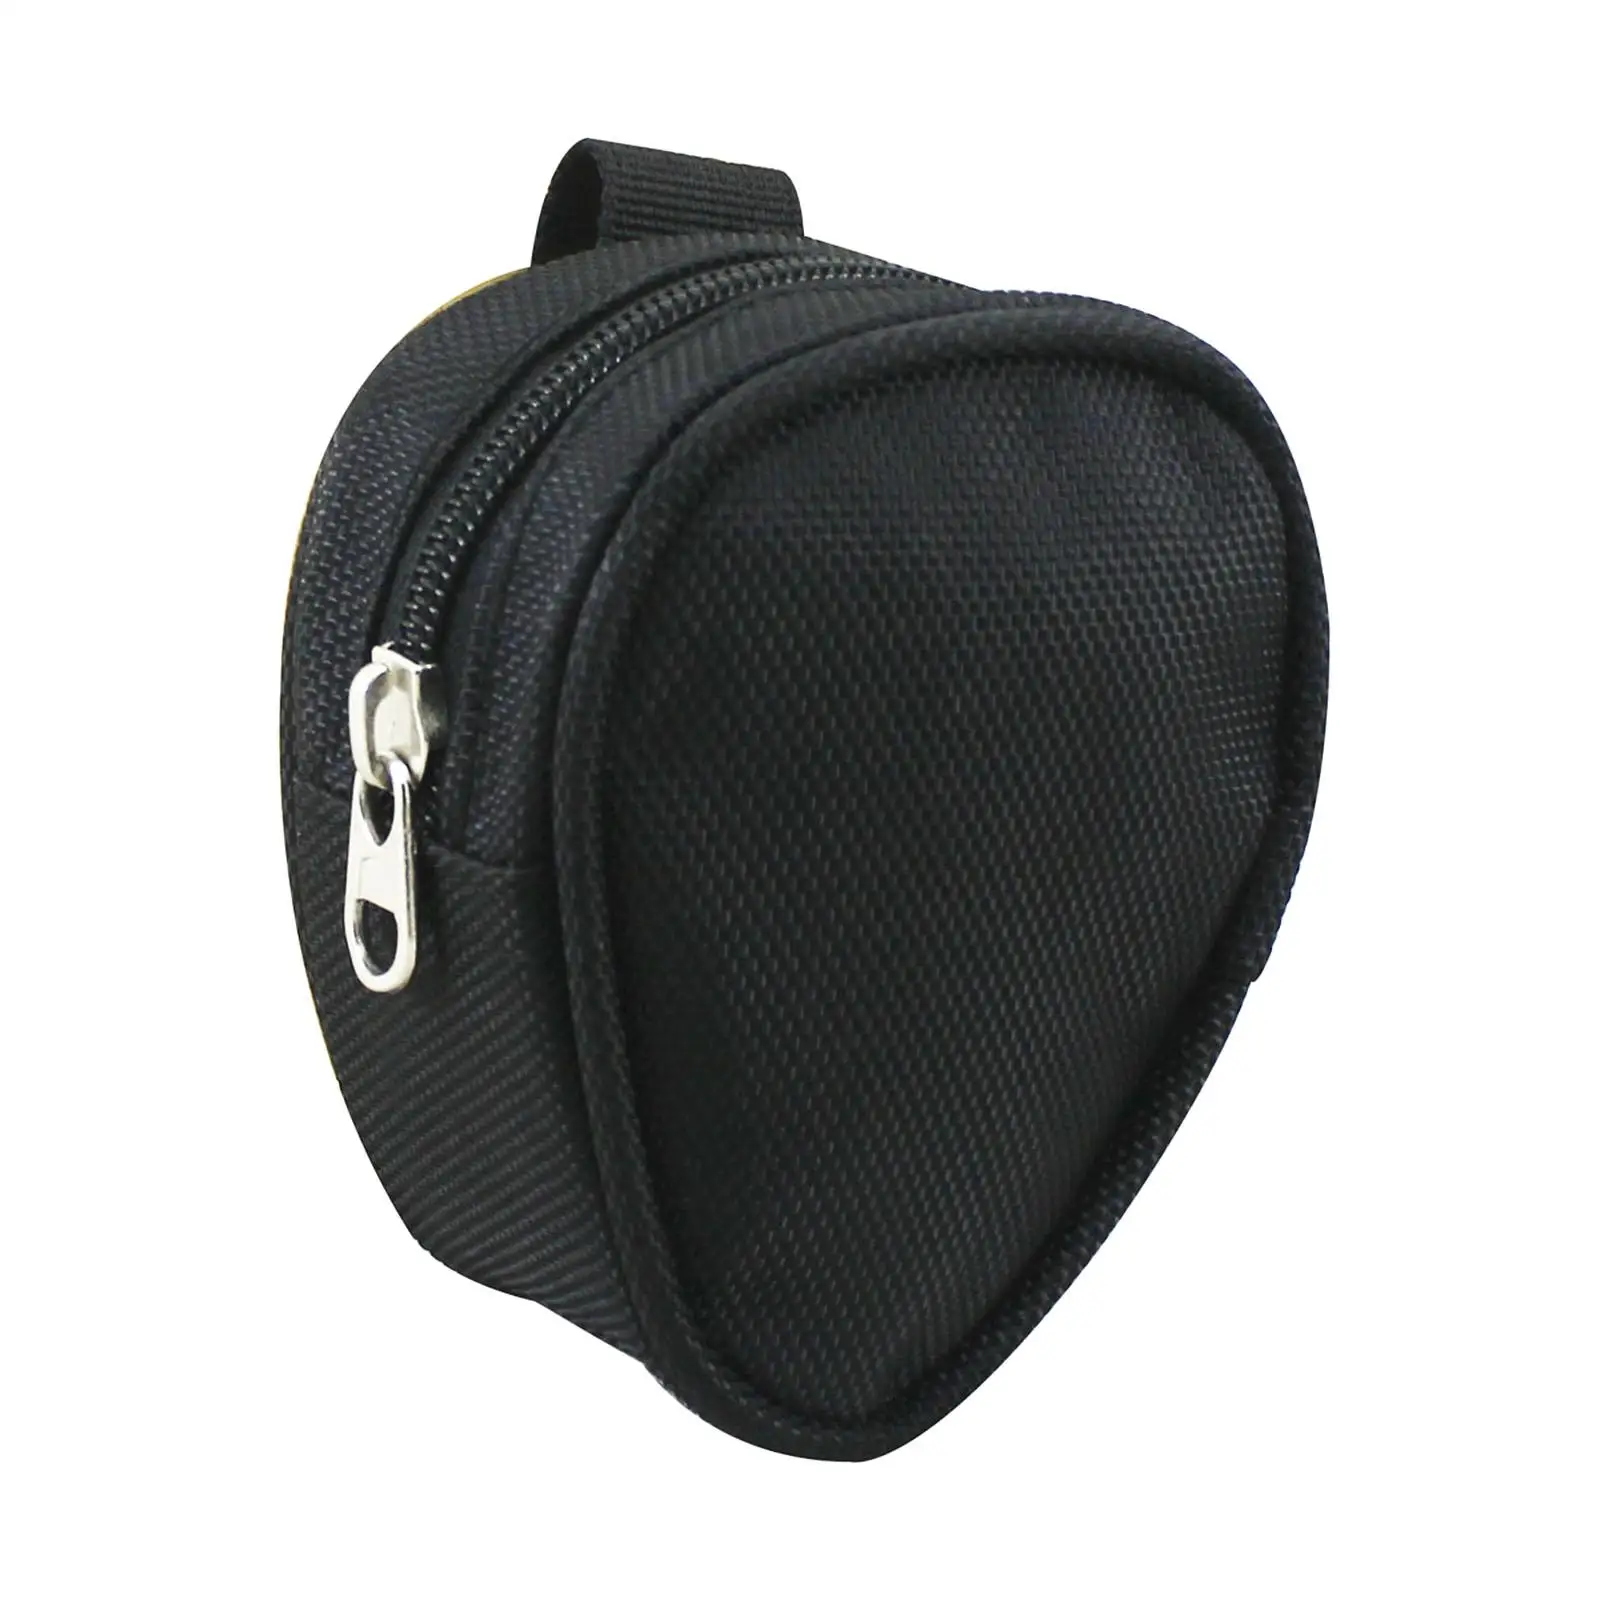 Disc Brake Lock Bag Wheel Disc Lock Bag for Universal Motorcycle Attachments